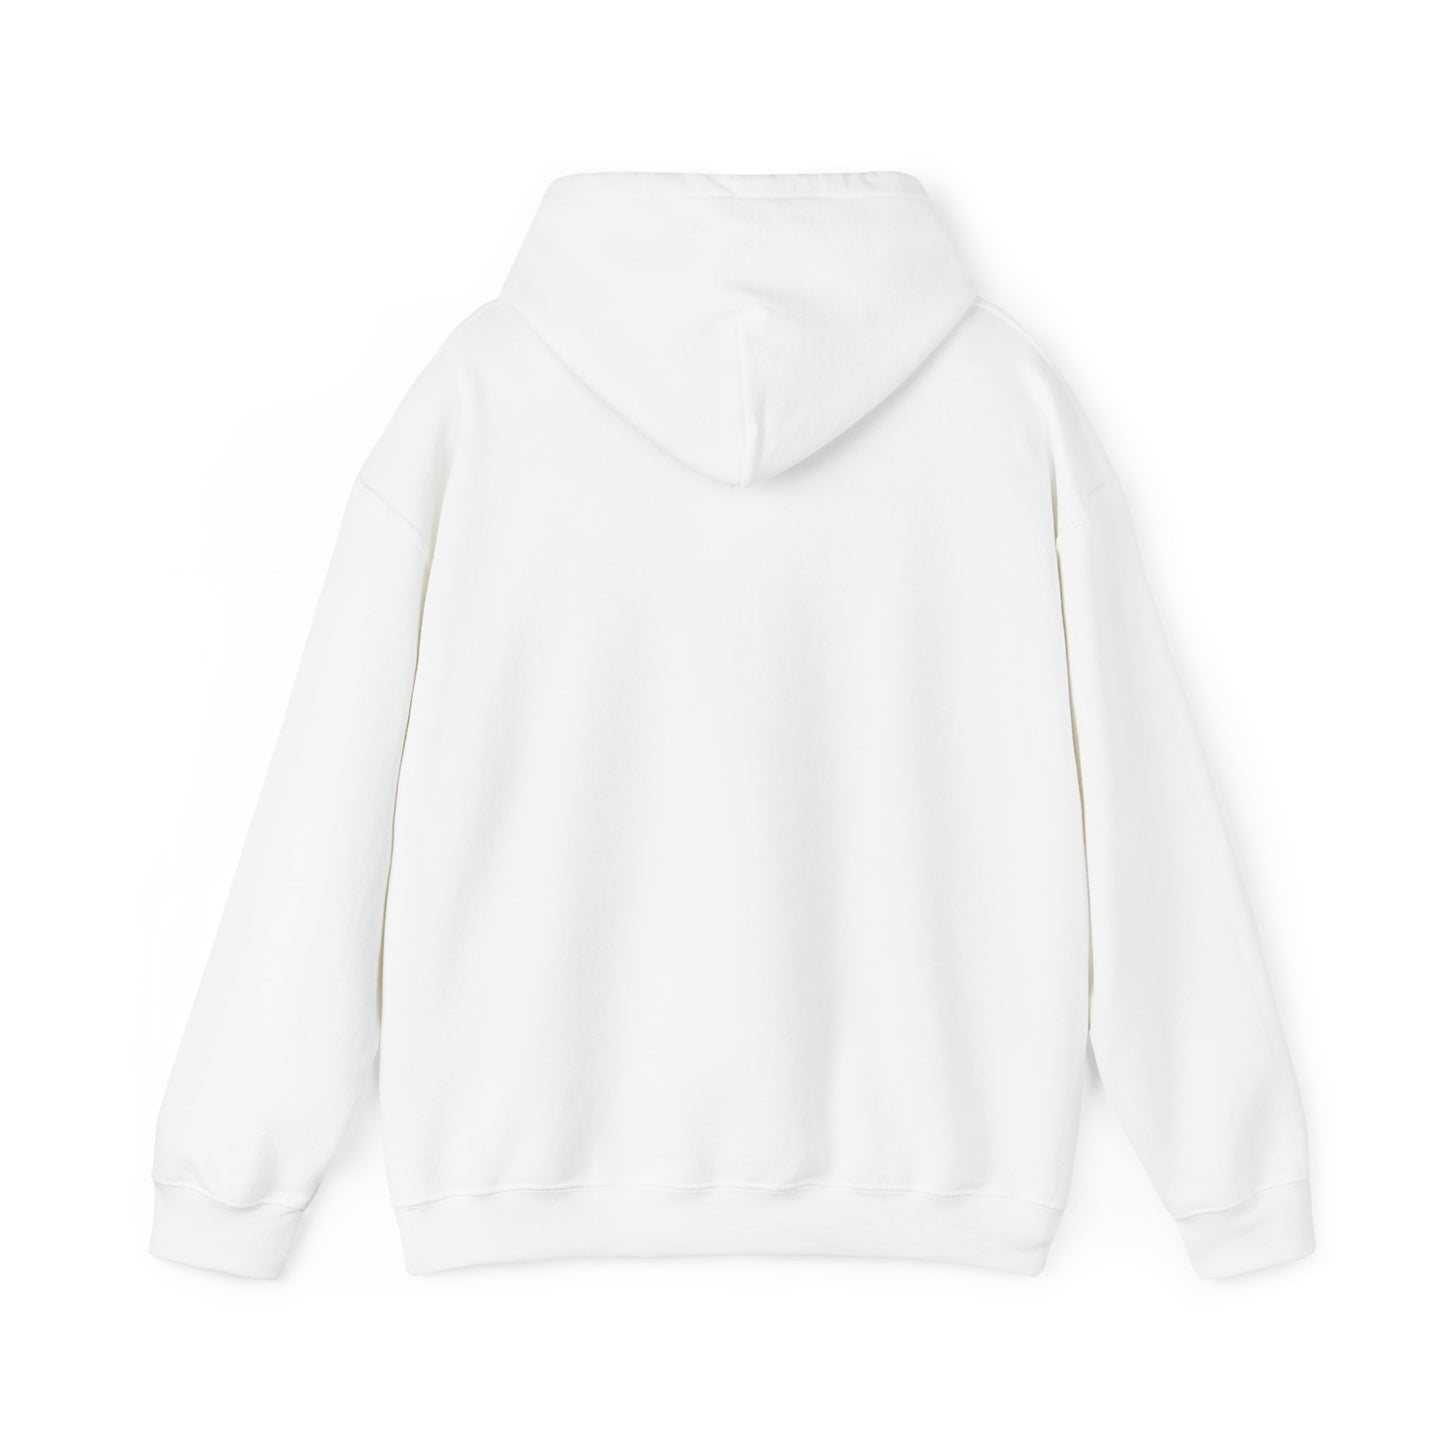 New York City Coordinates NYC Unisex Heavy Blend™ Hooded Sweatshirt Hoodie